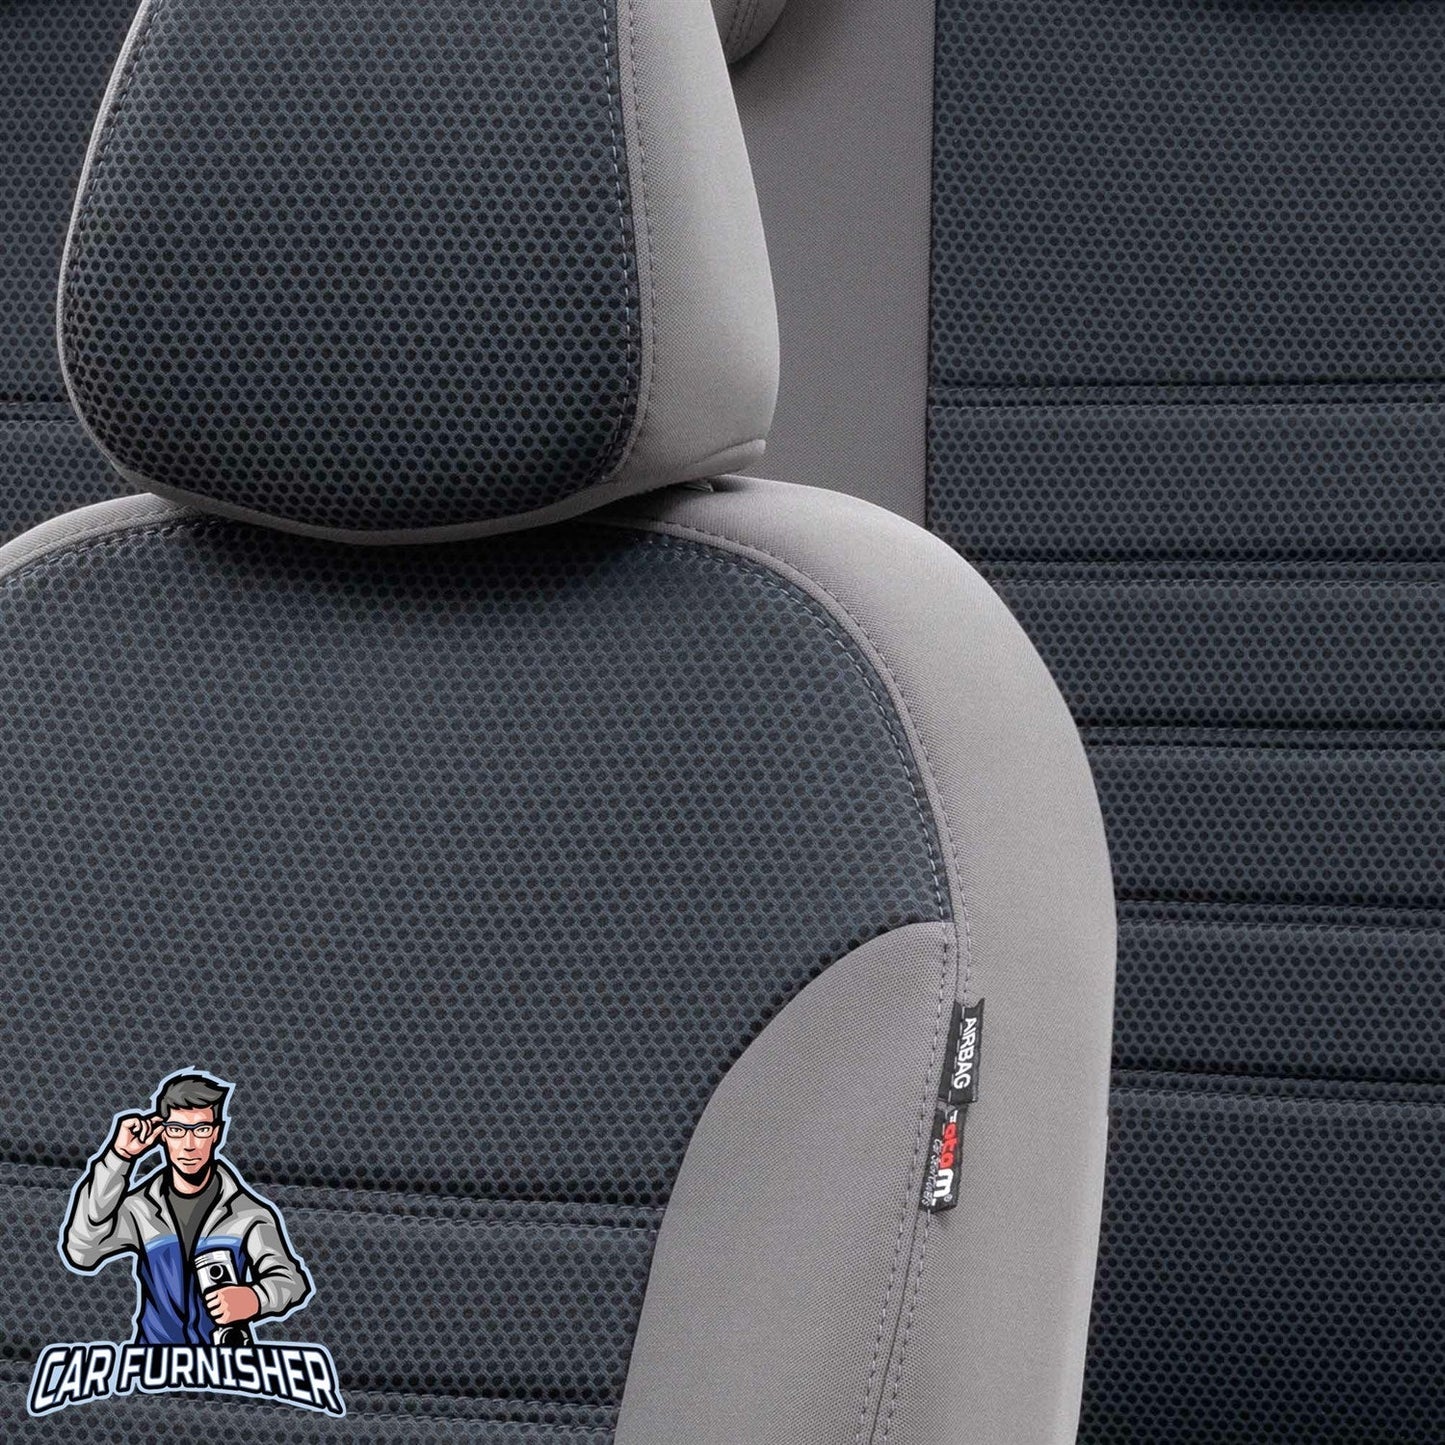 Hyundai Elantra Seat Covers Original Jacquard Design Smoked Jacquard Fabric